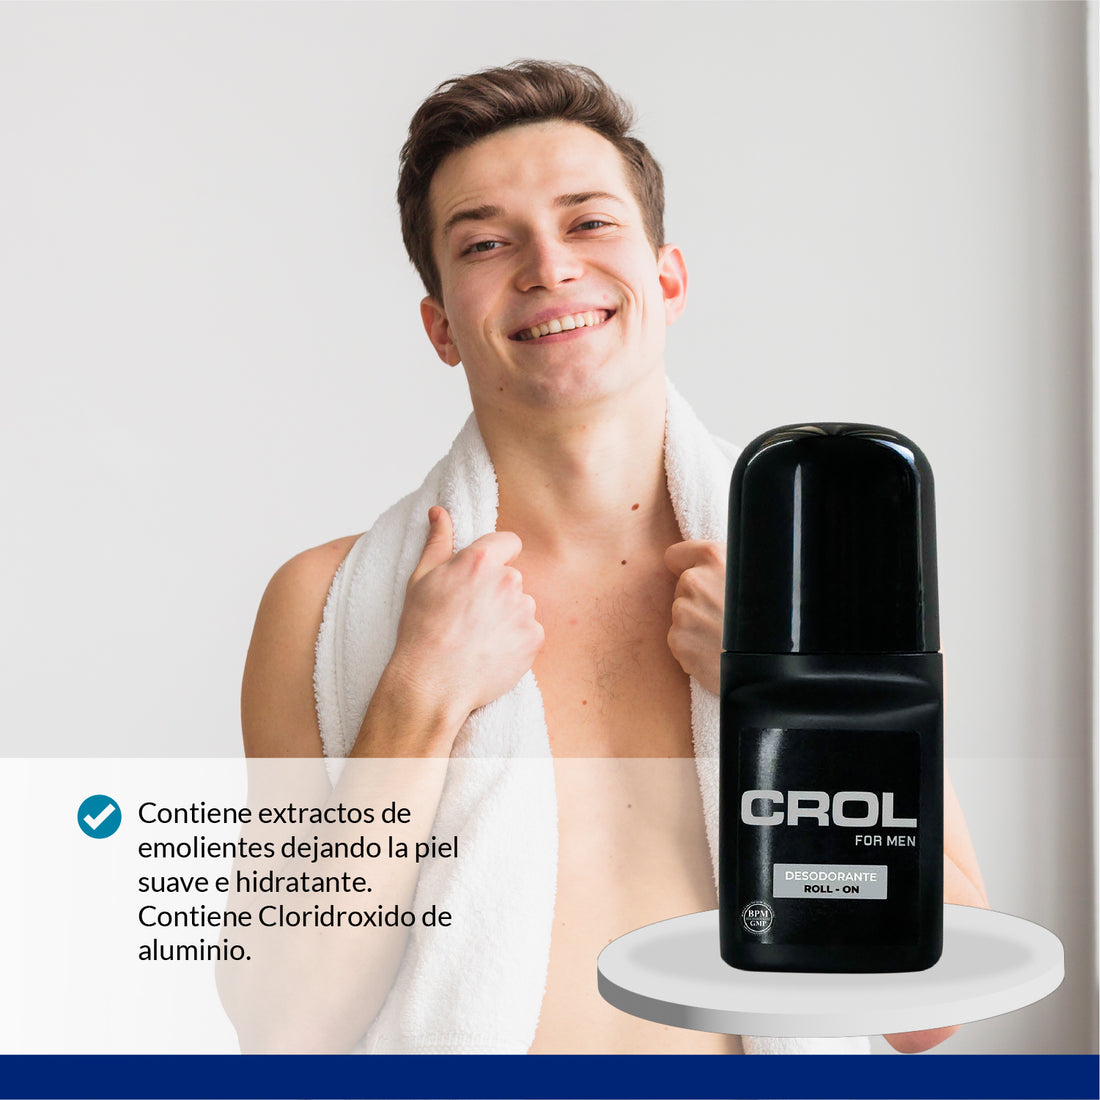 Desodorante -  Crol For Men x 50ml